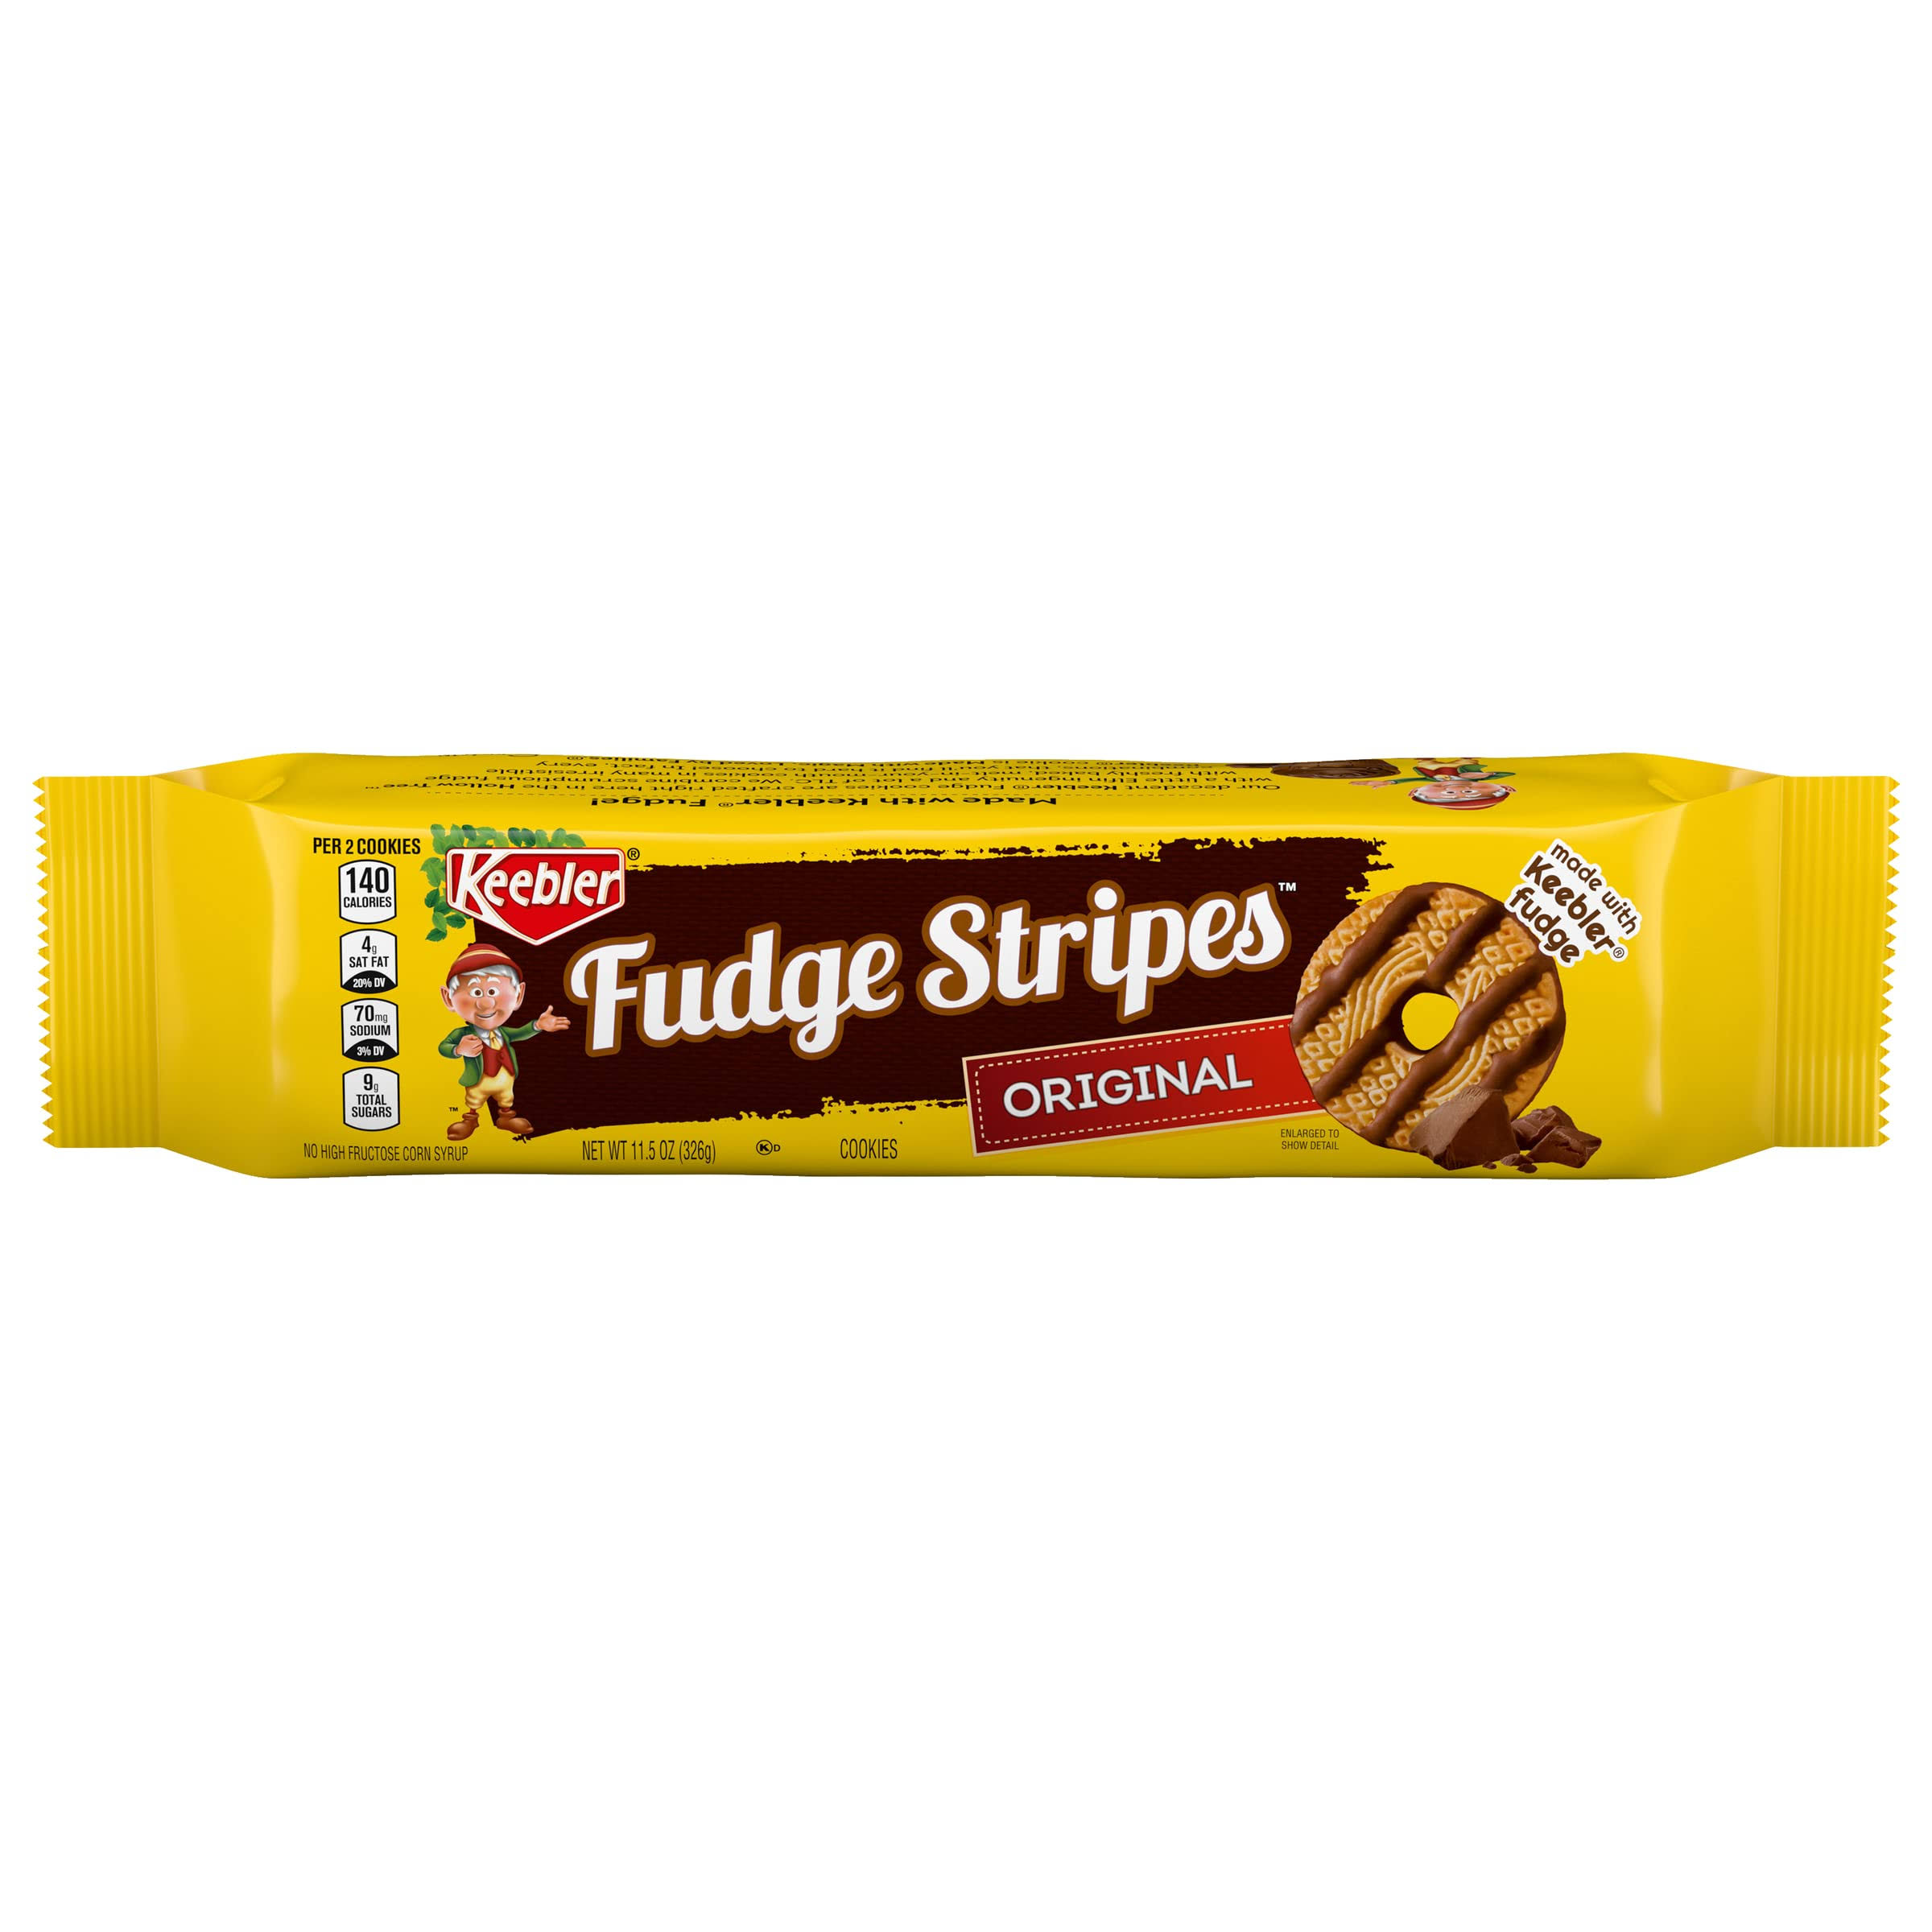 Keebler Cookies, Fudge Stripes, Original - 11.5 oz